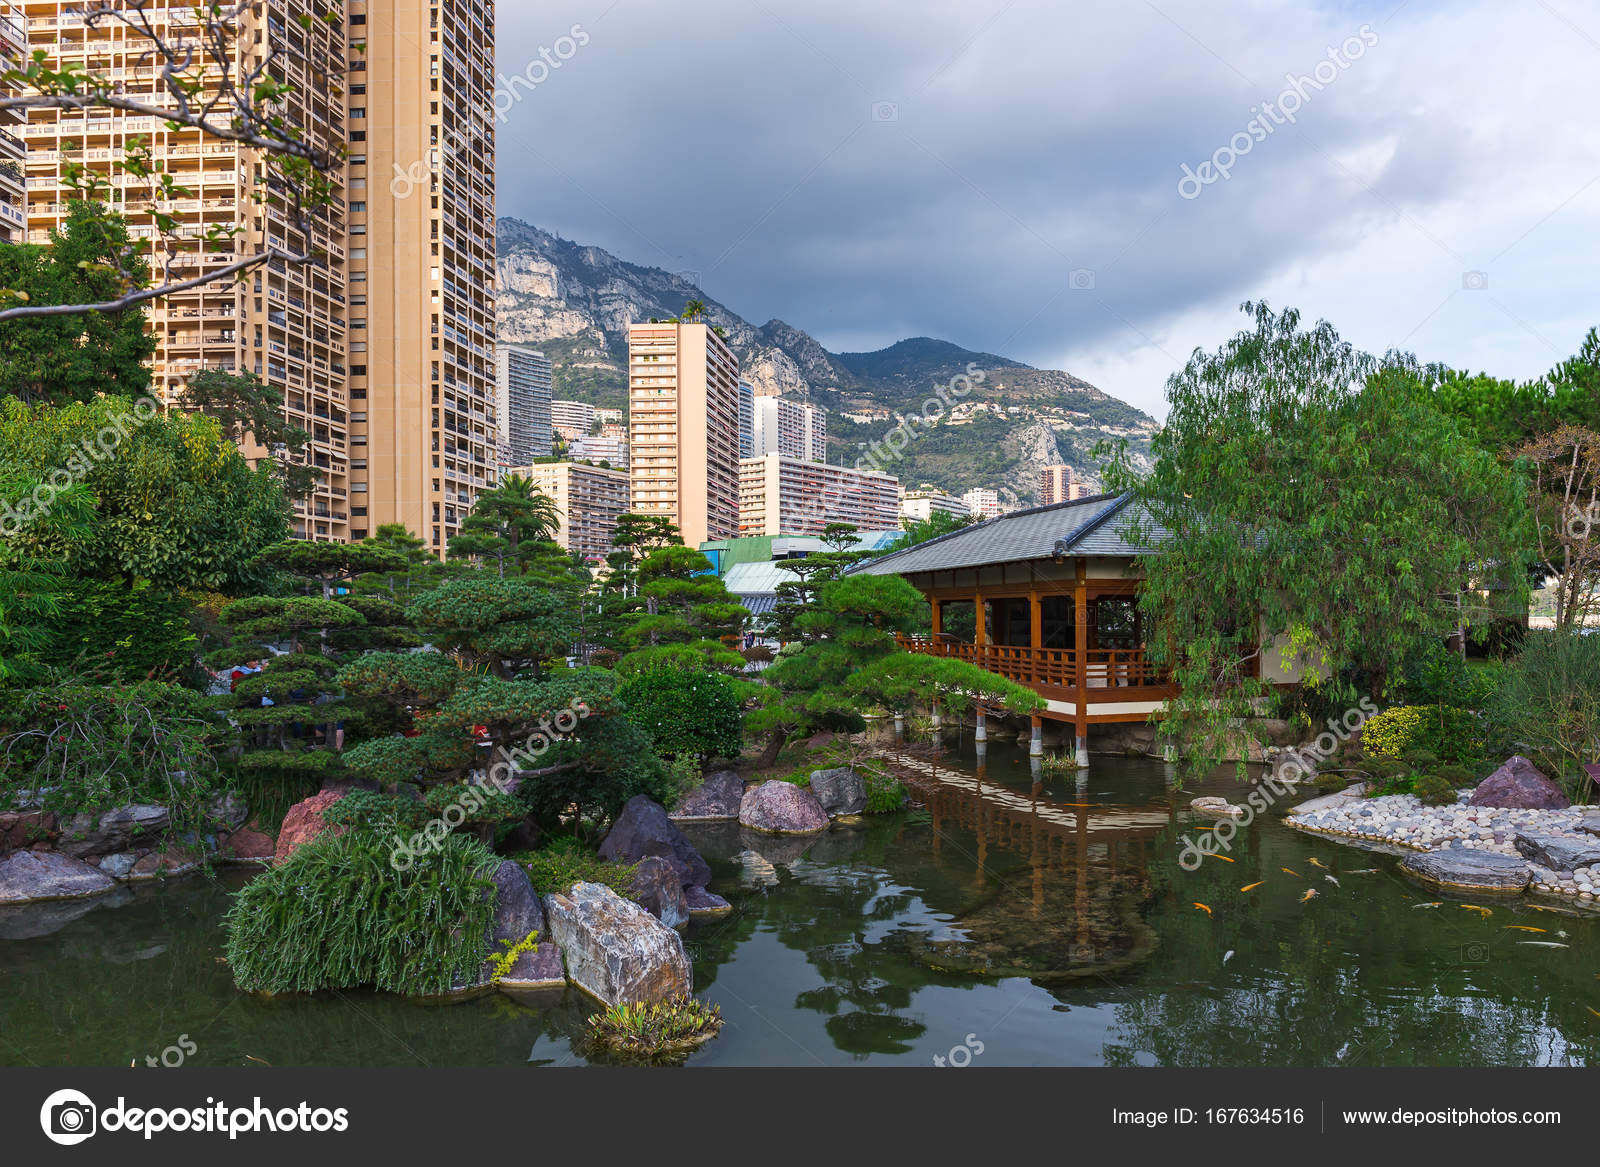 Japanese Garden In Monte Carlo Stock Photo C Observer 167634516